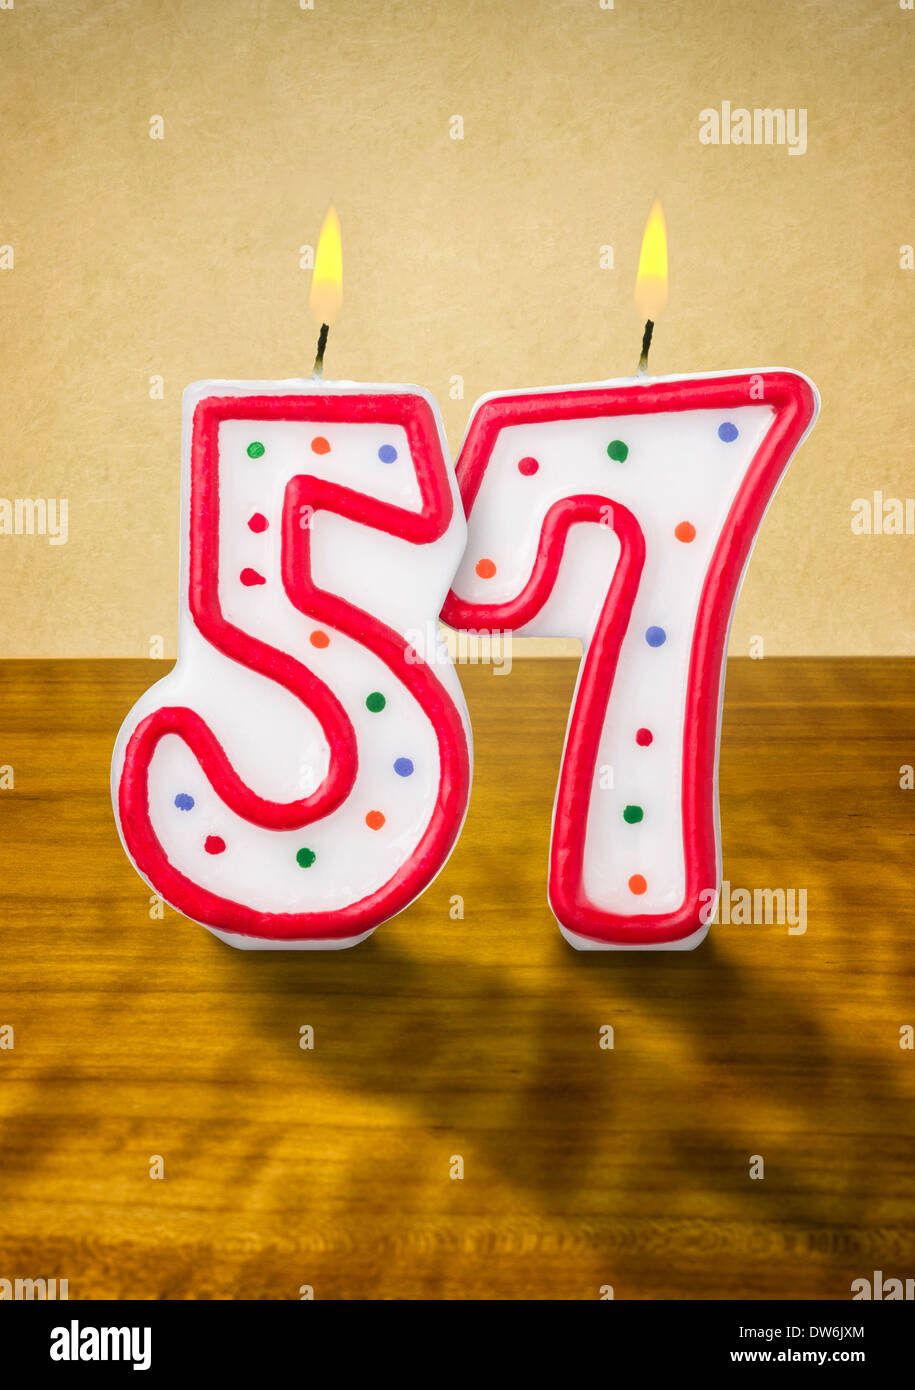 Burning birthday candles number 57 Stock Photo - Alamy